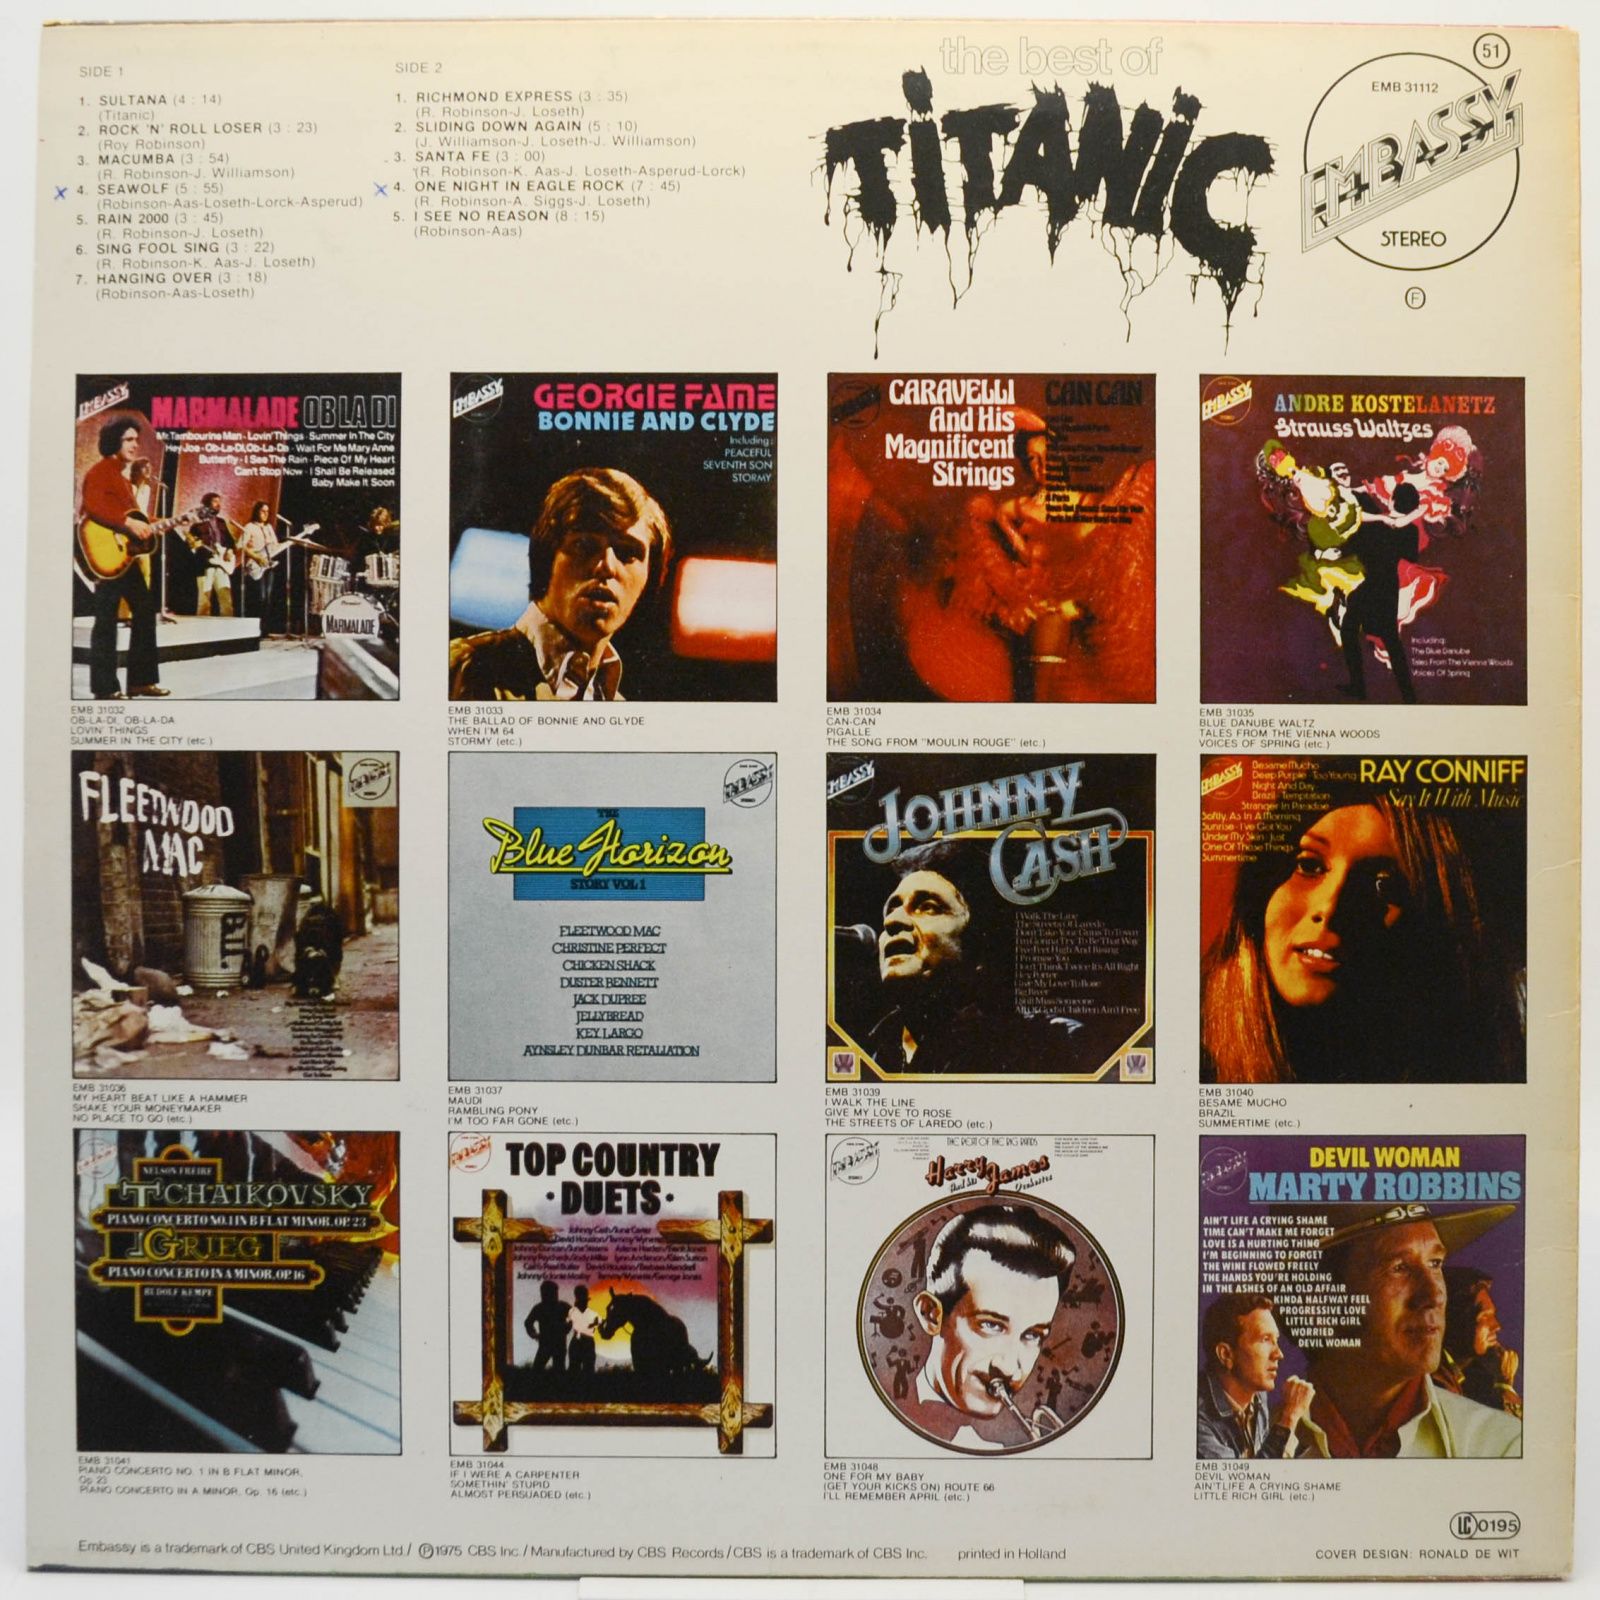 Titanic — The Best Of Titanic, 1975